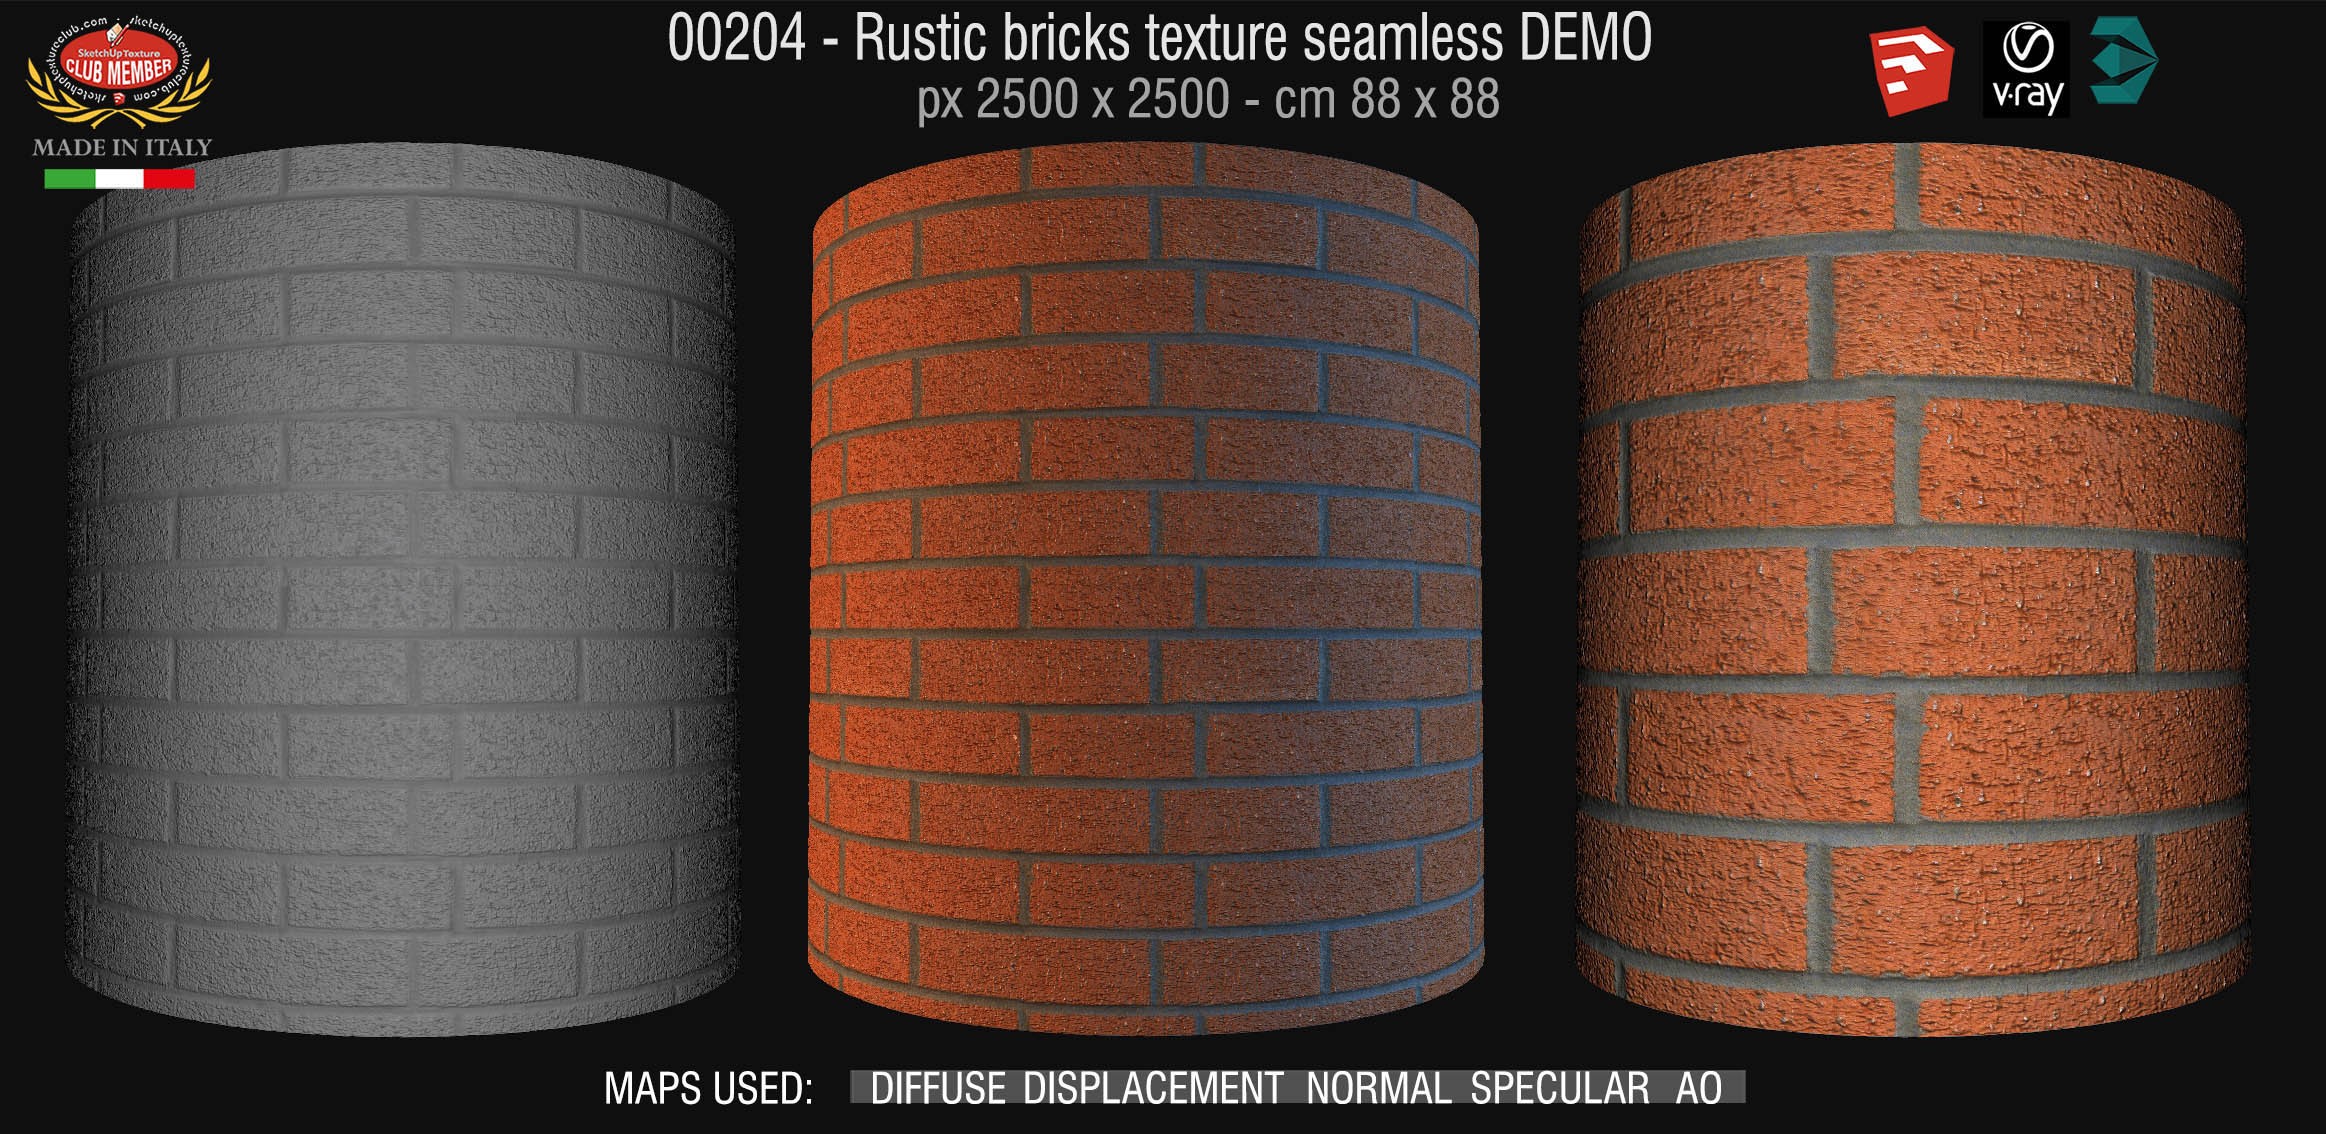 00204 Rustic bricks texture seamless + maps DEMO